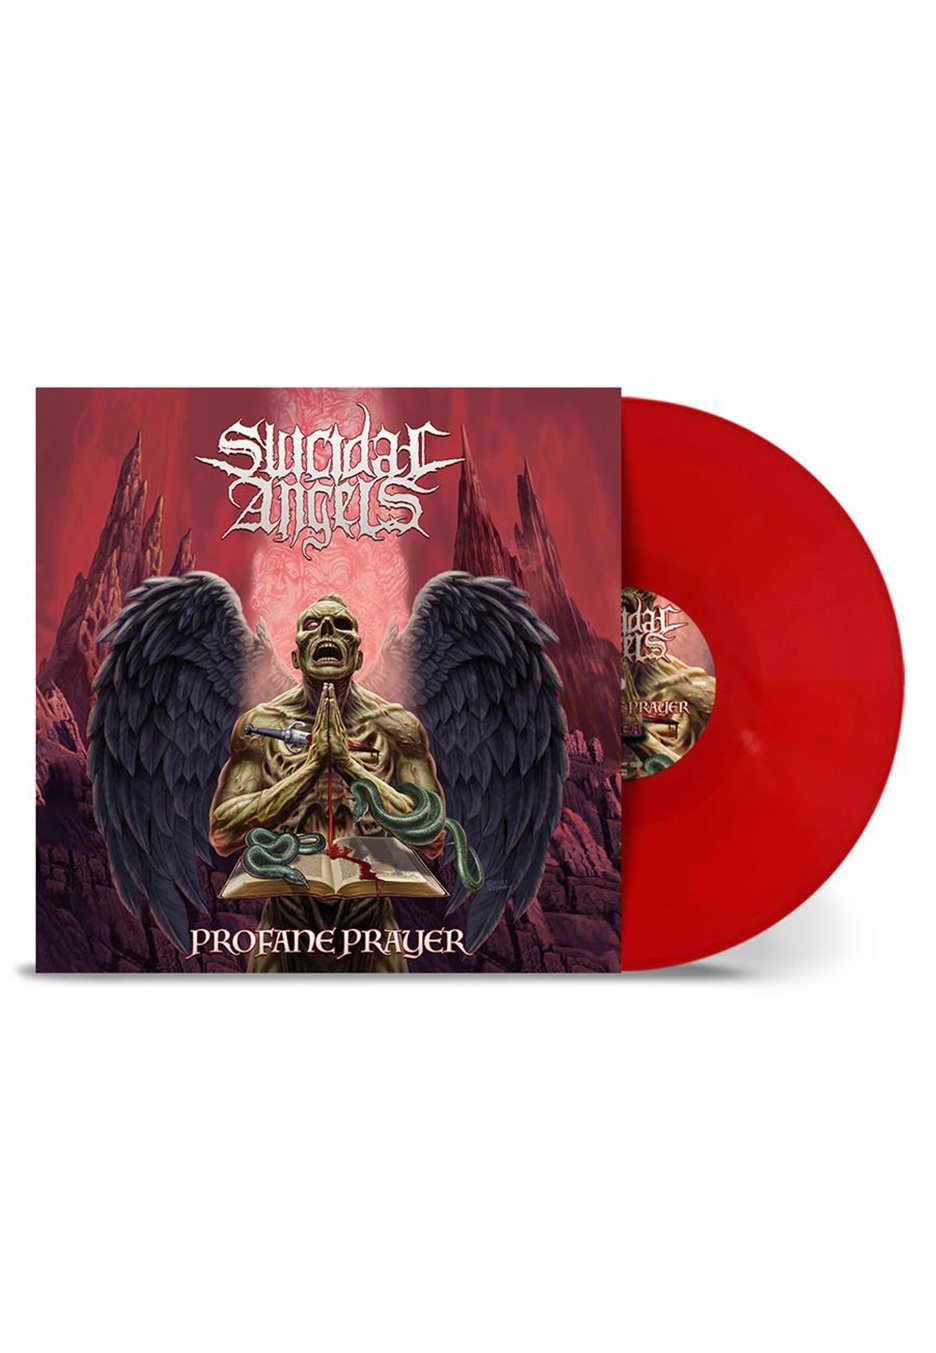 Suicidal Angels - Profane Prayer Ltd. Solid Red - Colored Vinyl